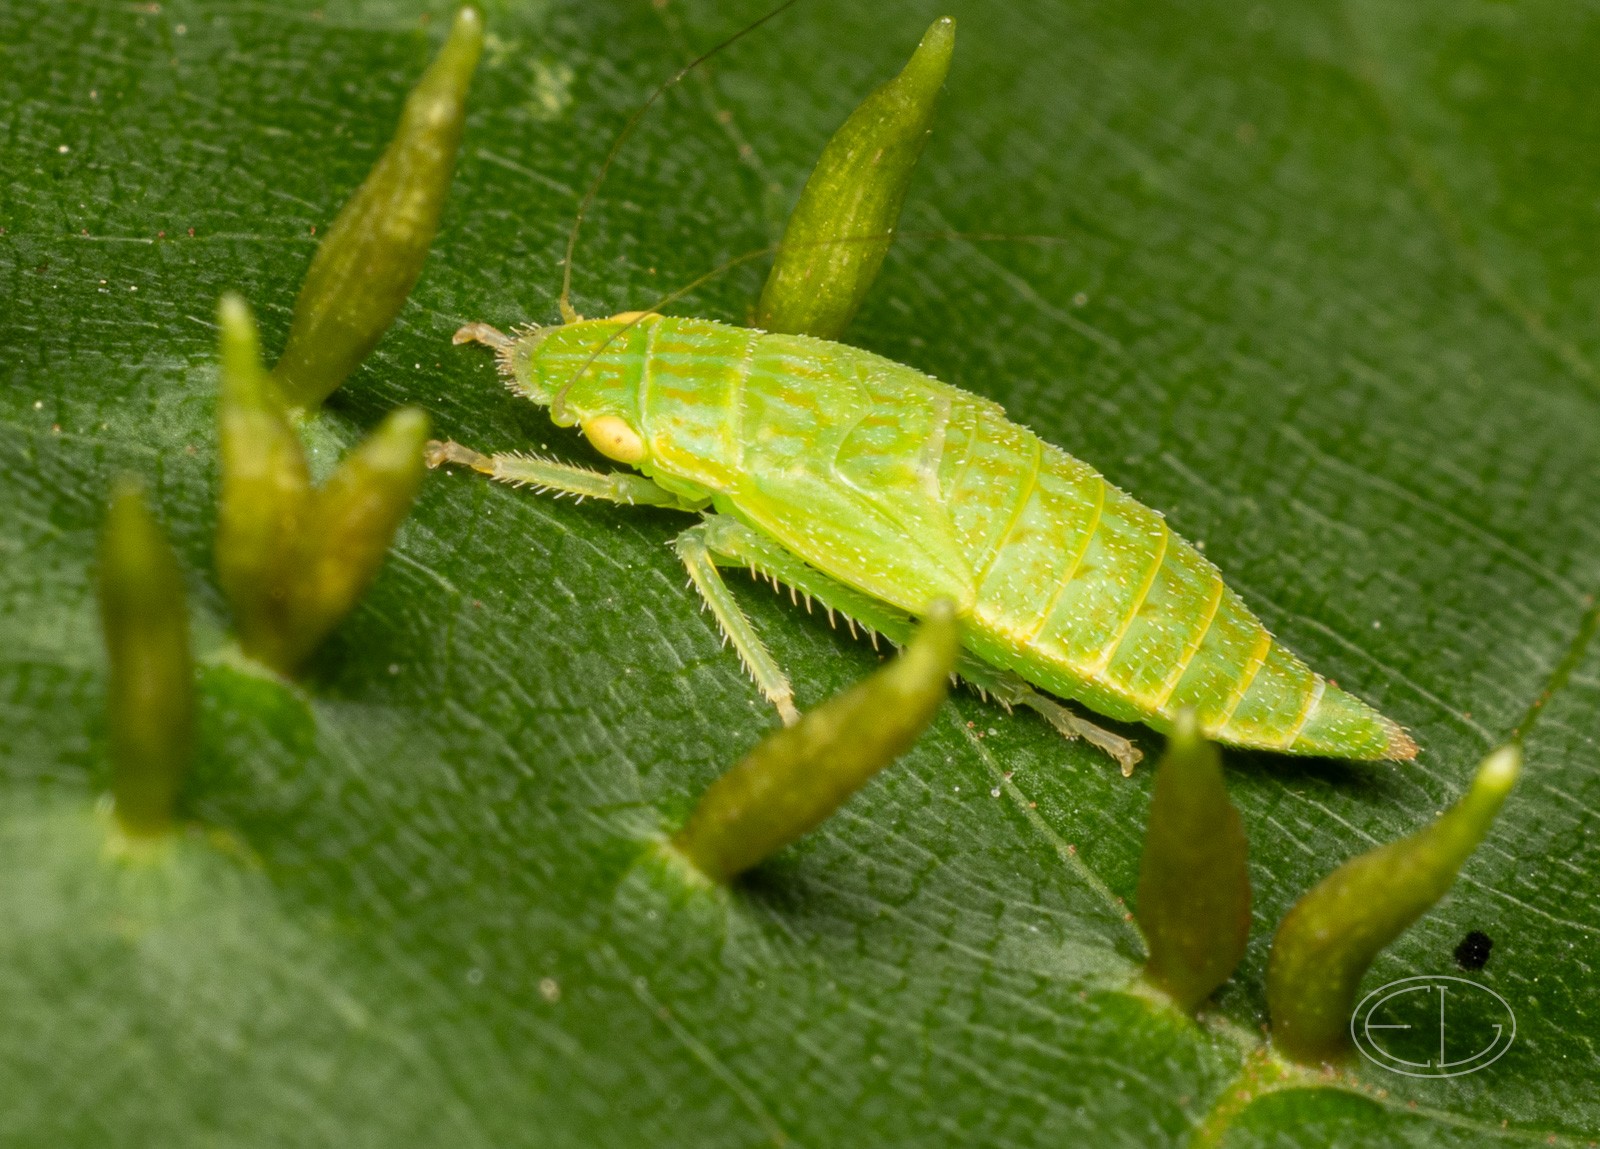 R7_D4411 Leafhopper nymph.jpg